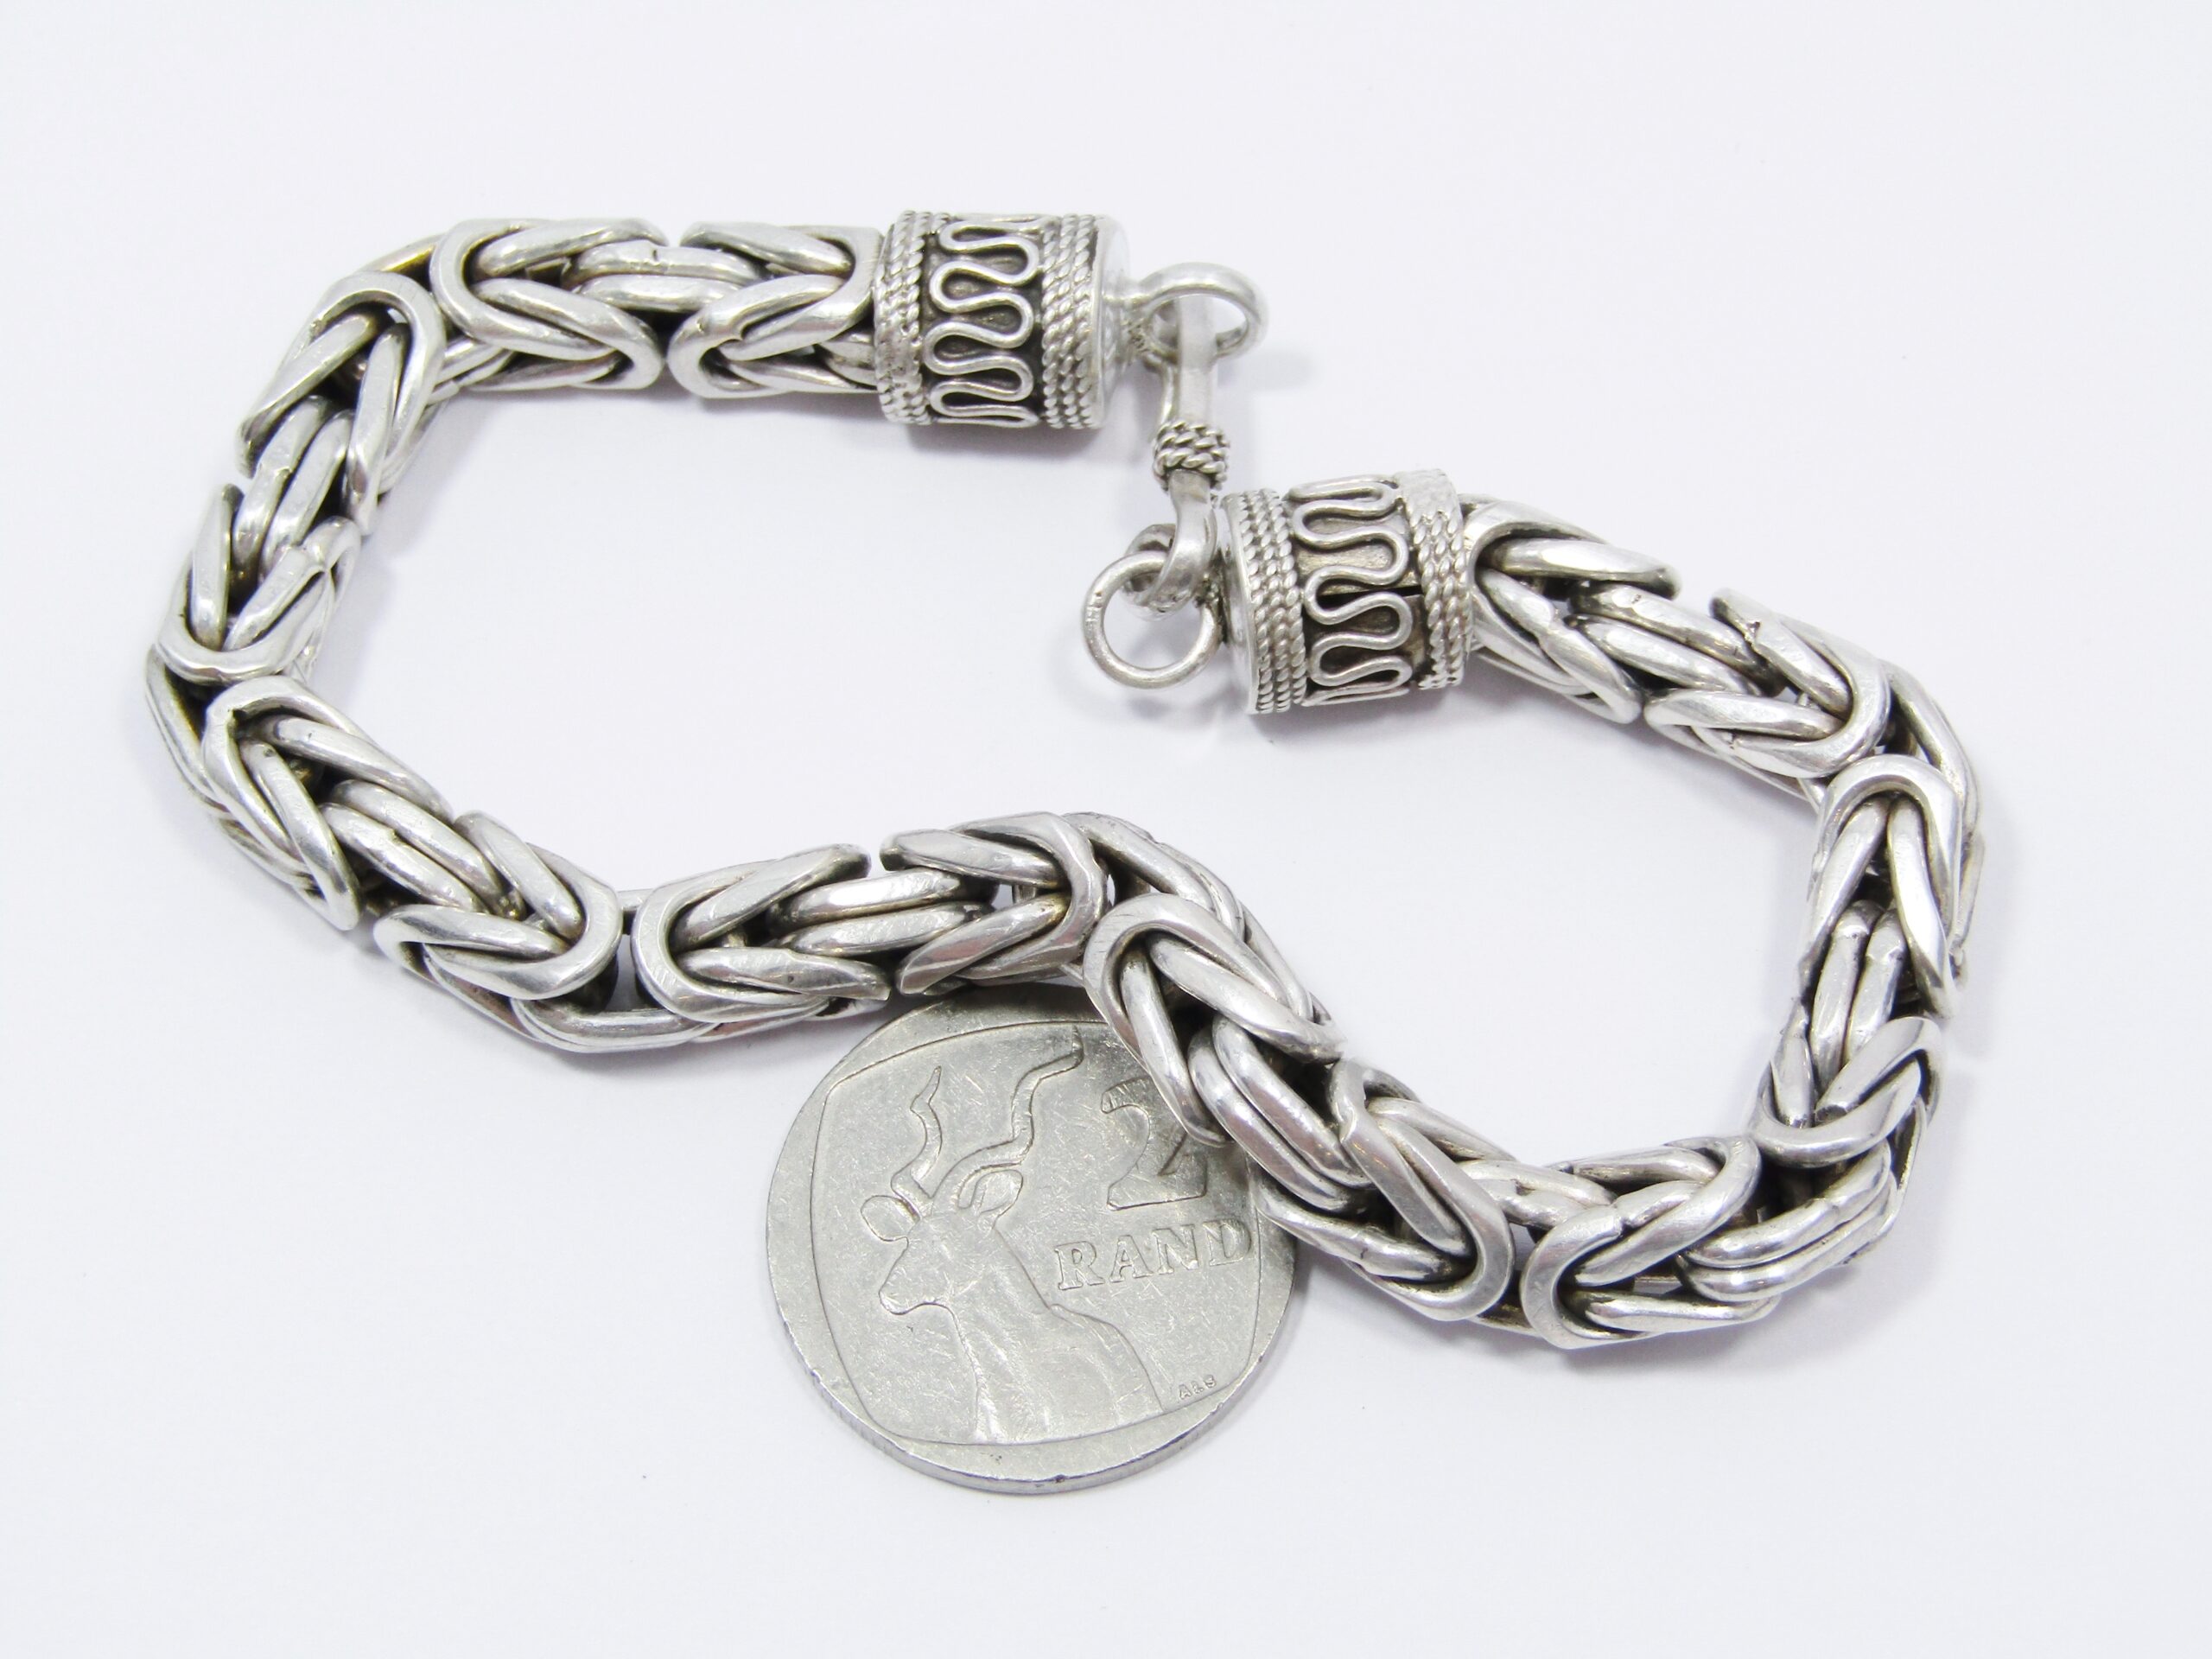 A Gorgeous Weighty Tibetan Design Bracelet in Sterling Silver